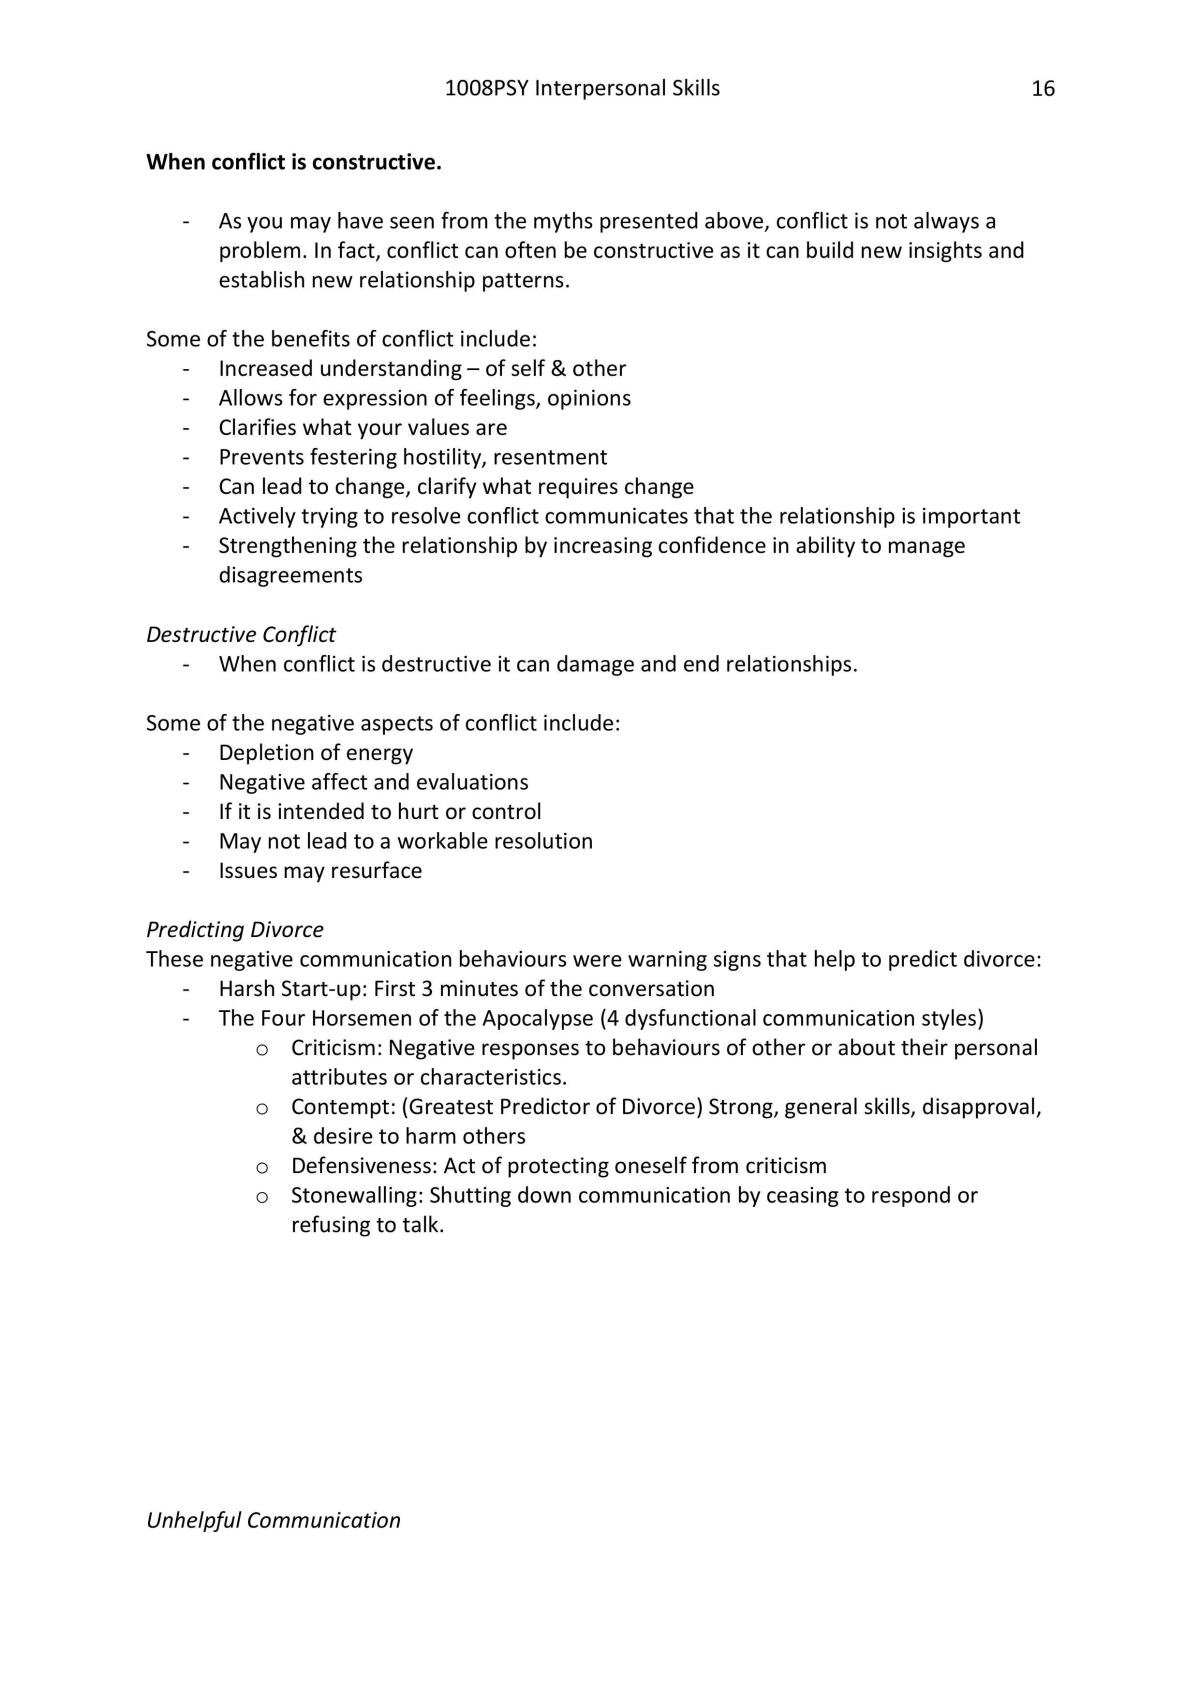 1008PSY Interpersonal Skills Module 1 - 3 - Page 16